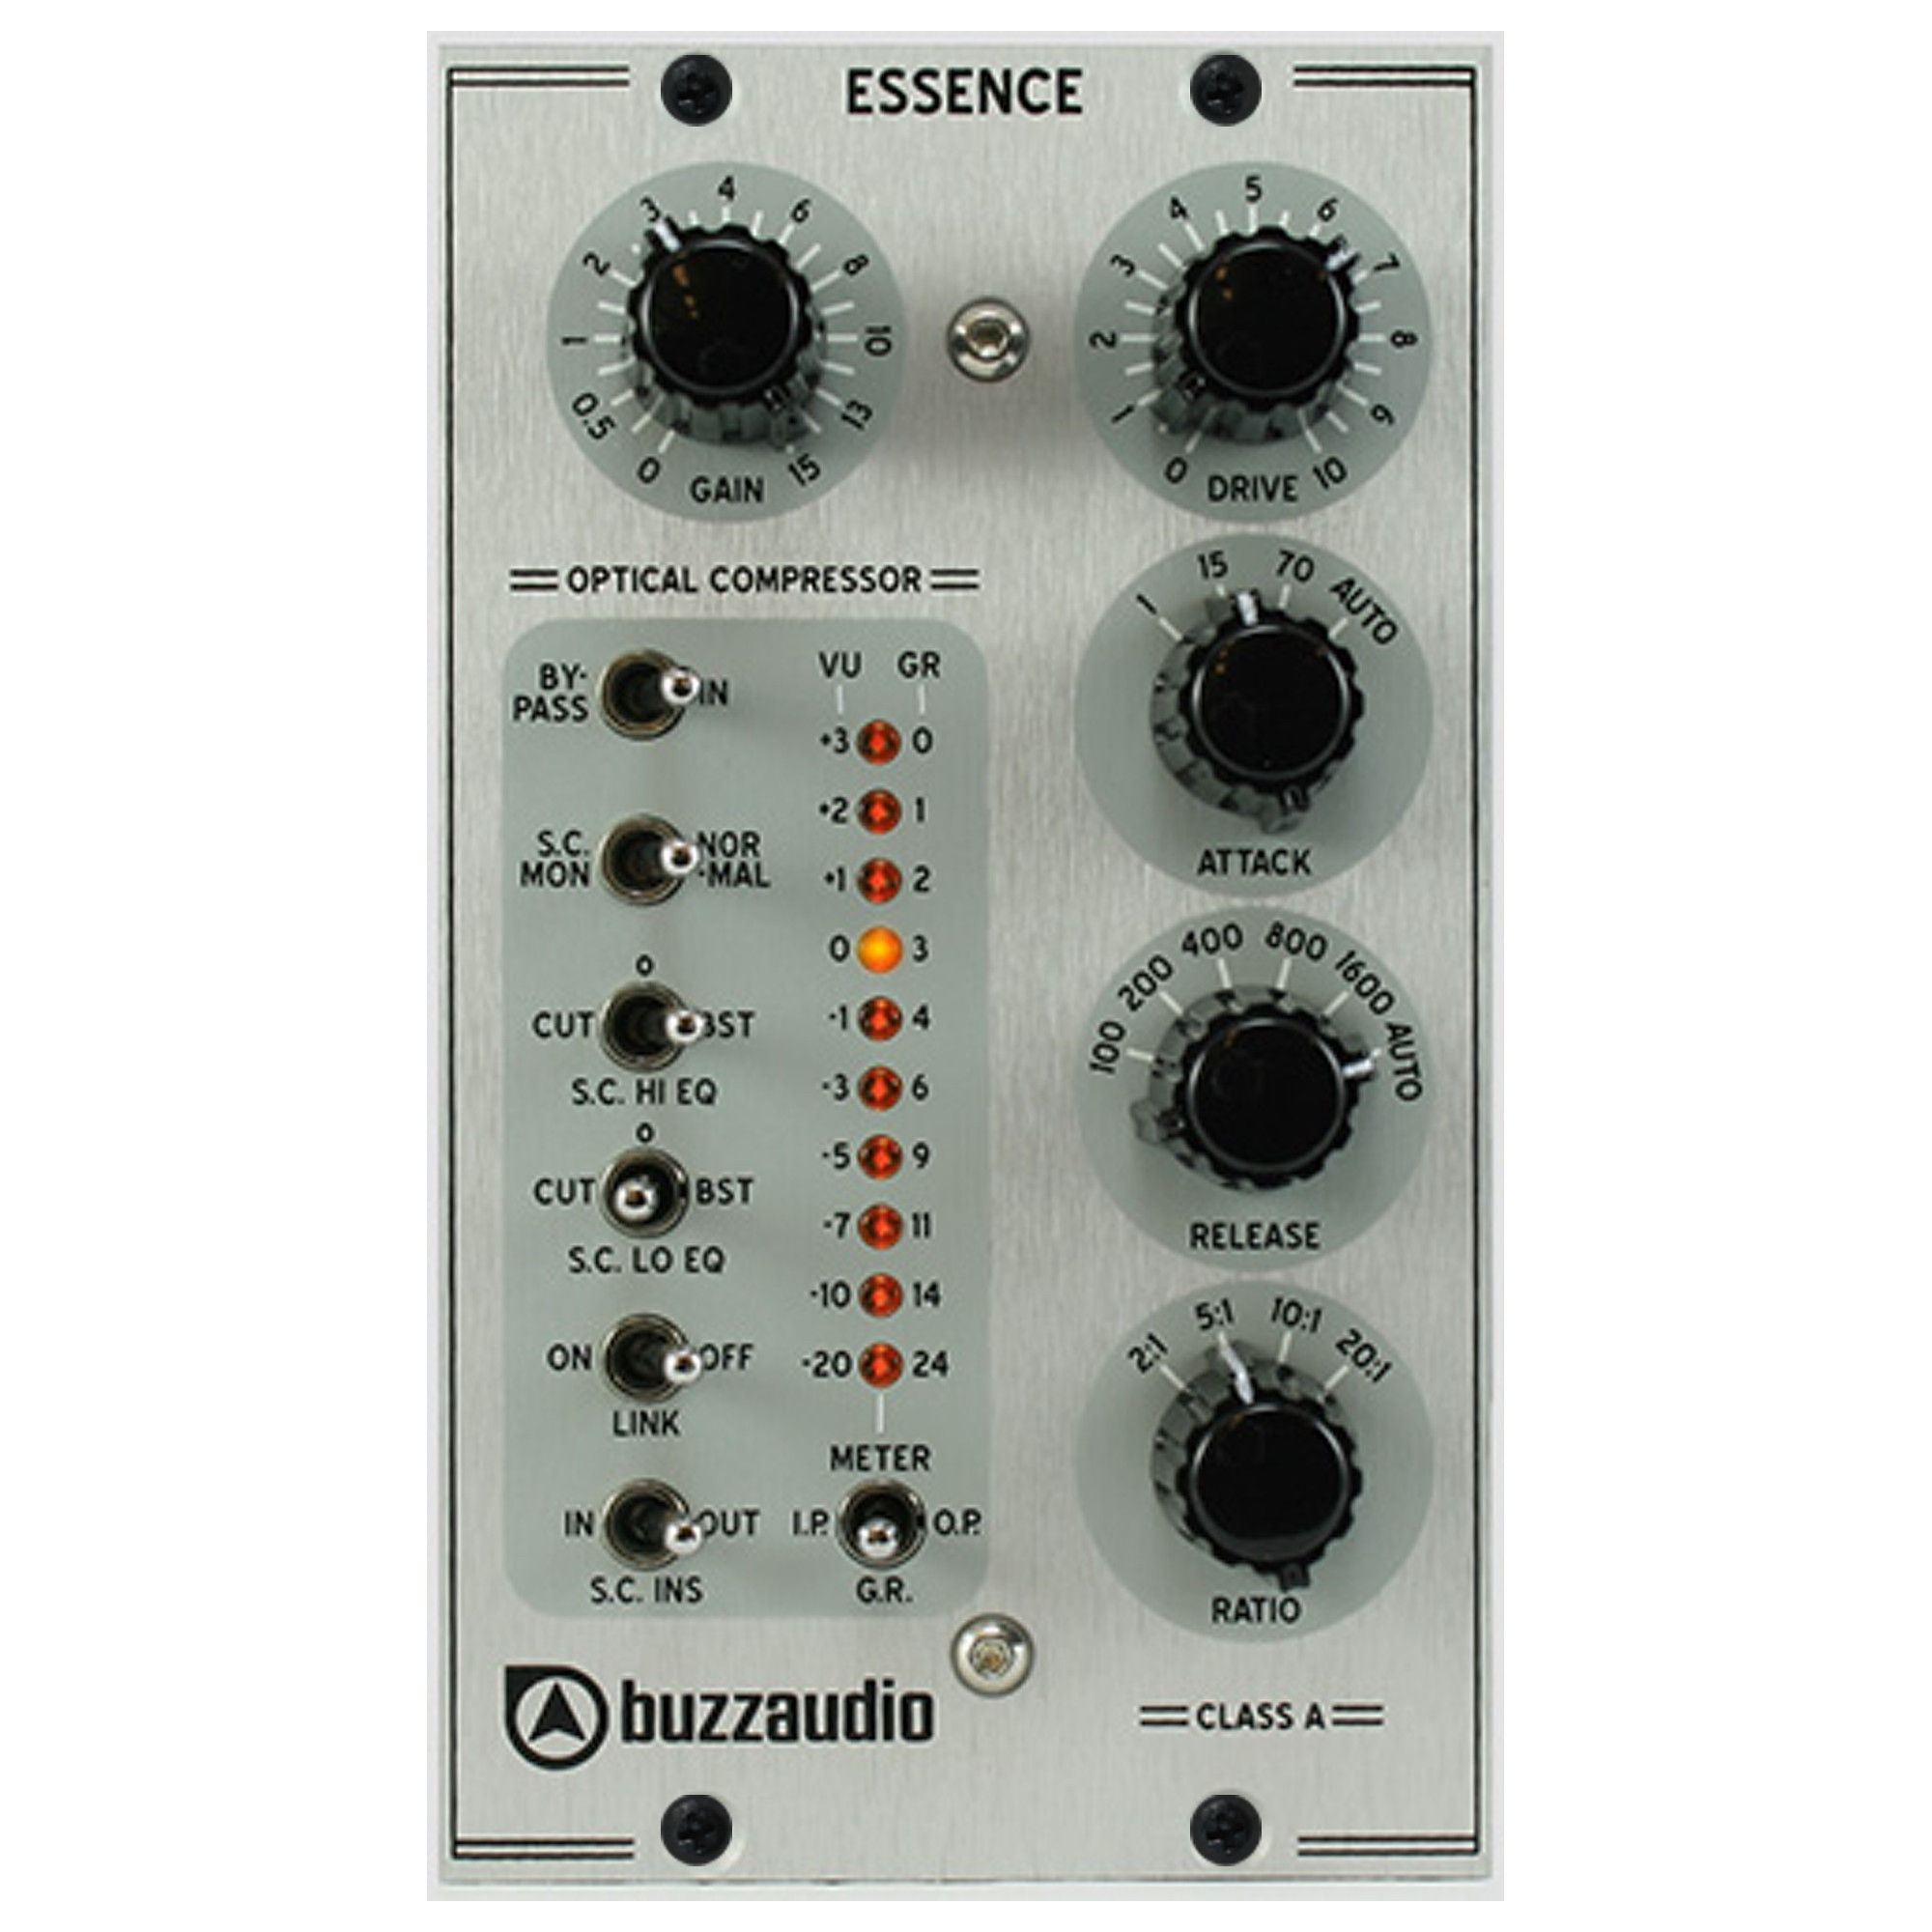 Buzz Audio 500 Series – Essence Compressor